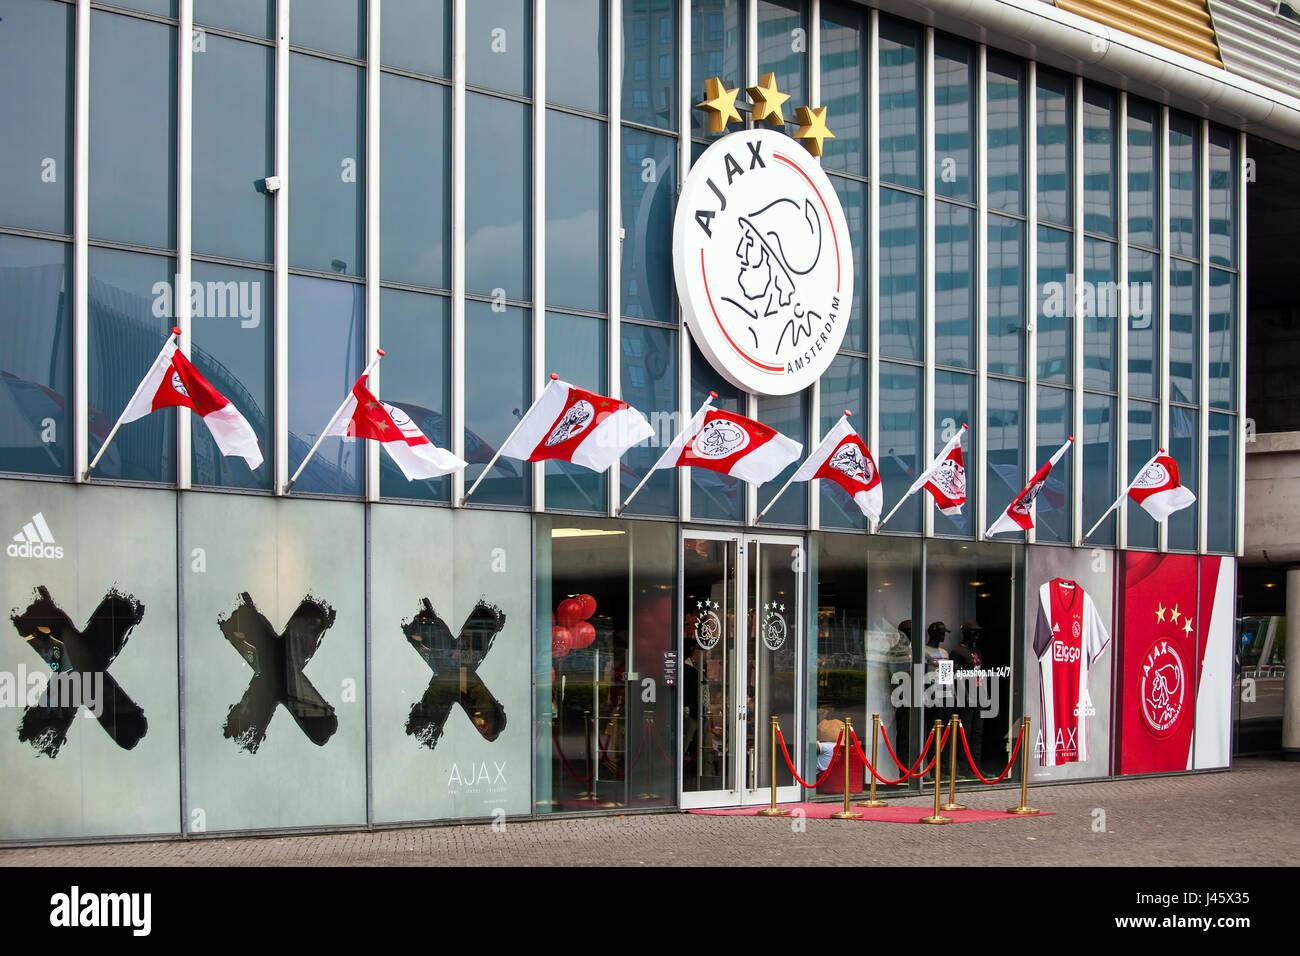 Ajax fotball club on Netherlands Stock Photo -